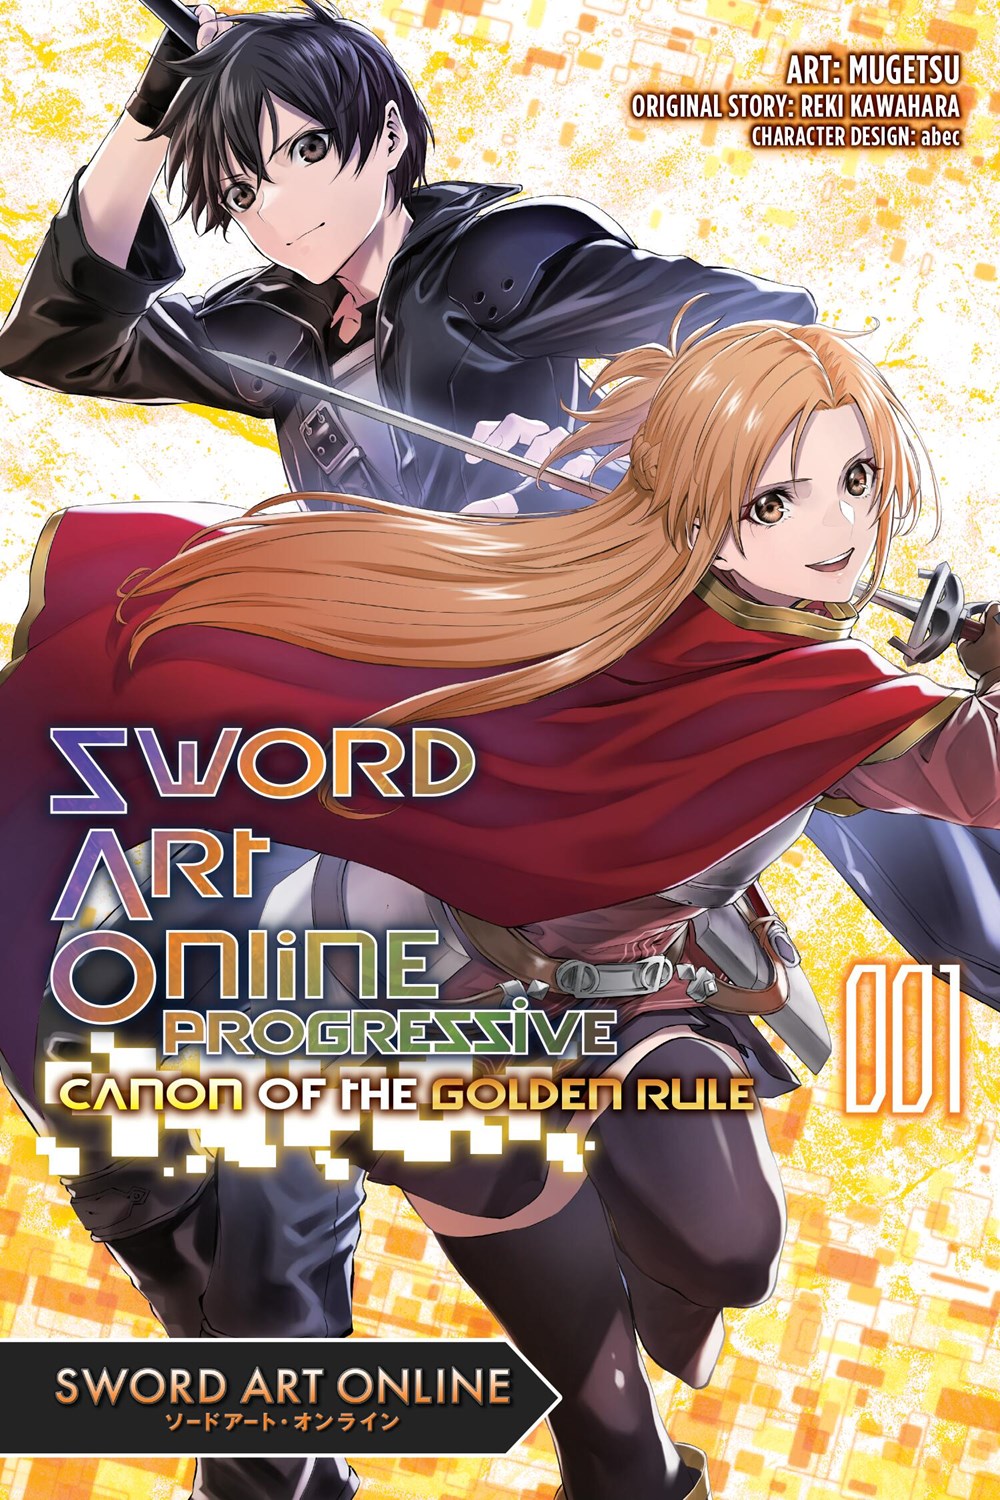 Sword Art Online Progressive Canon of the Golden Rule Manga Volume 1 image count 0